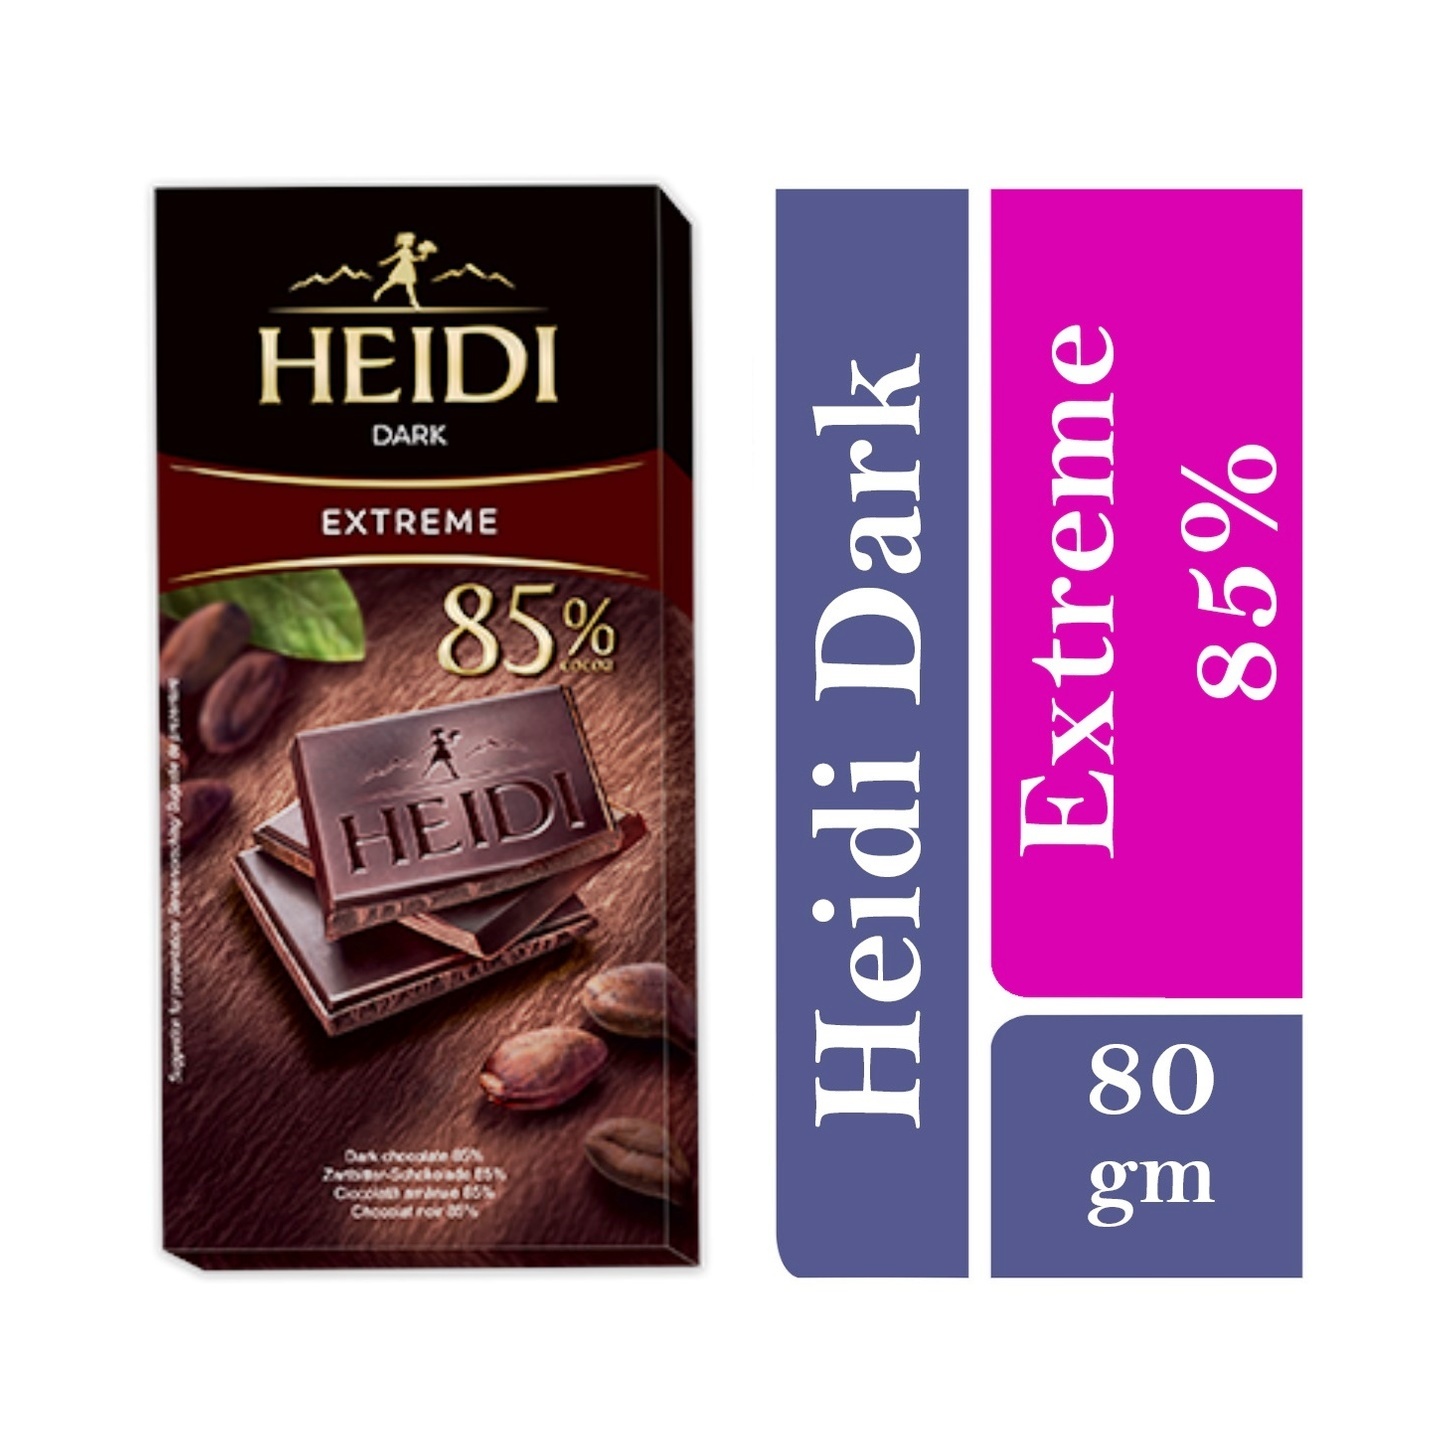 Heidi Dark Extreme Chocolate Bar 85 Cocoa